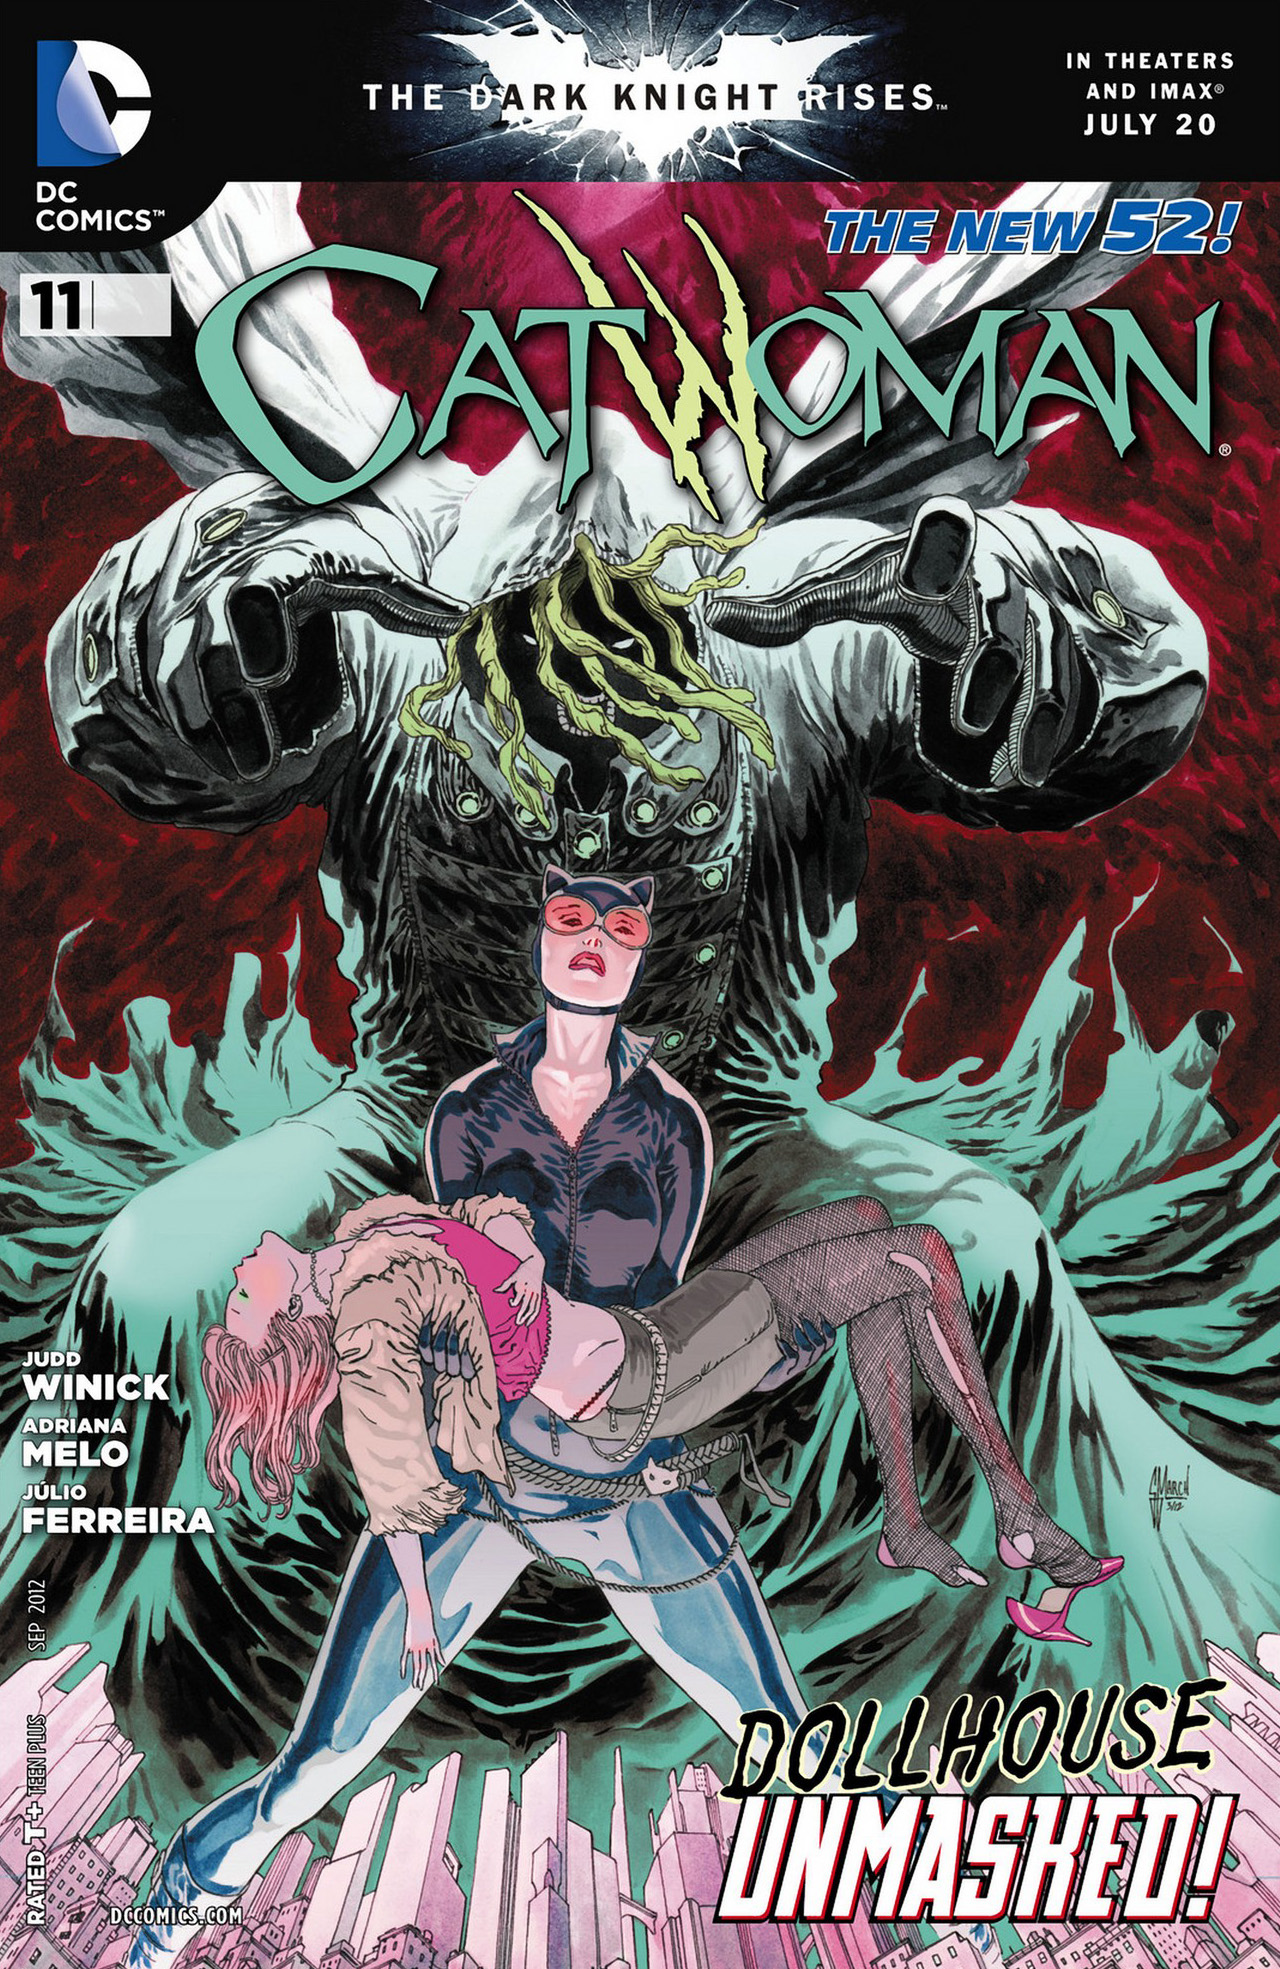 Catwoman Vol. 4 #11